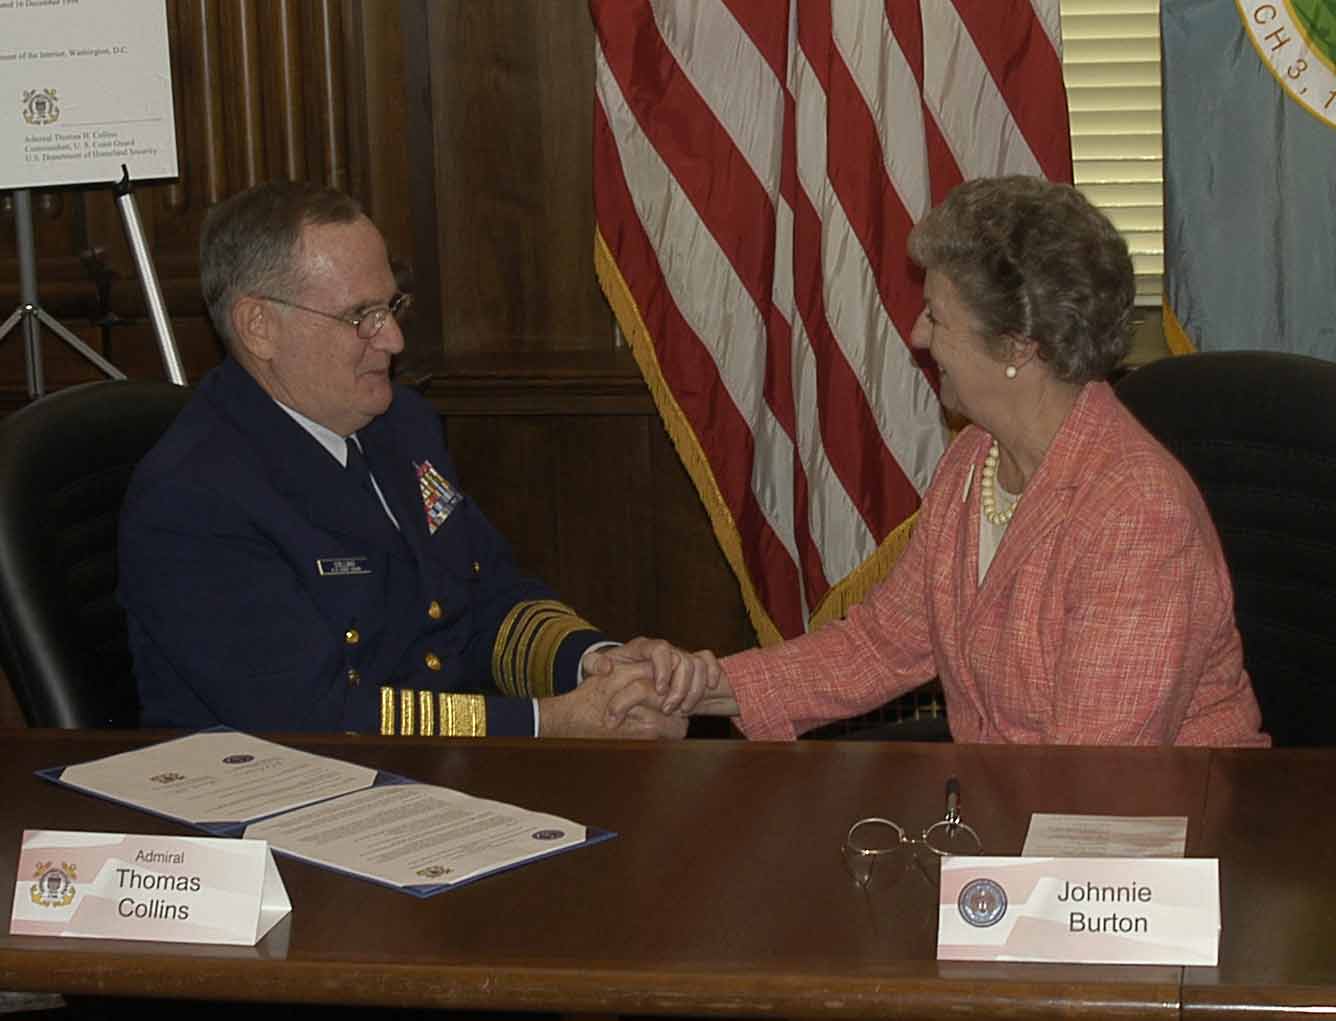 U.S. Coast Guard Admiral Thomas Collins and MMS Director Johnnie Burton